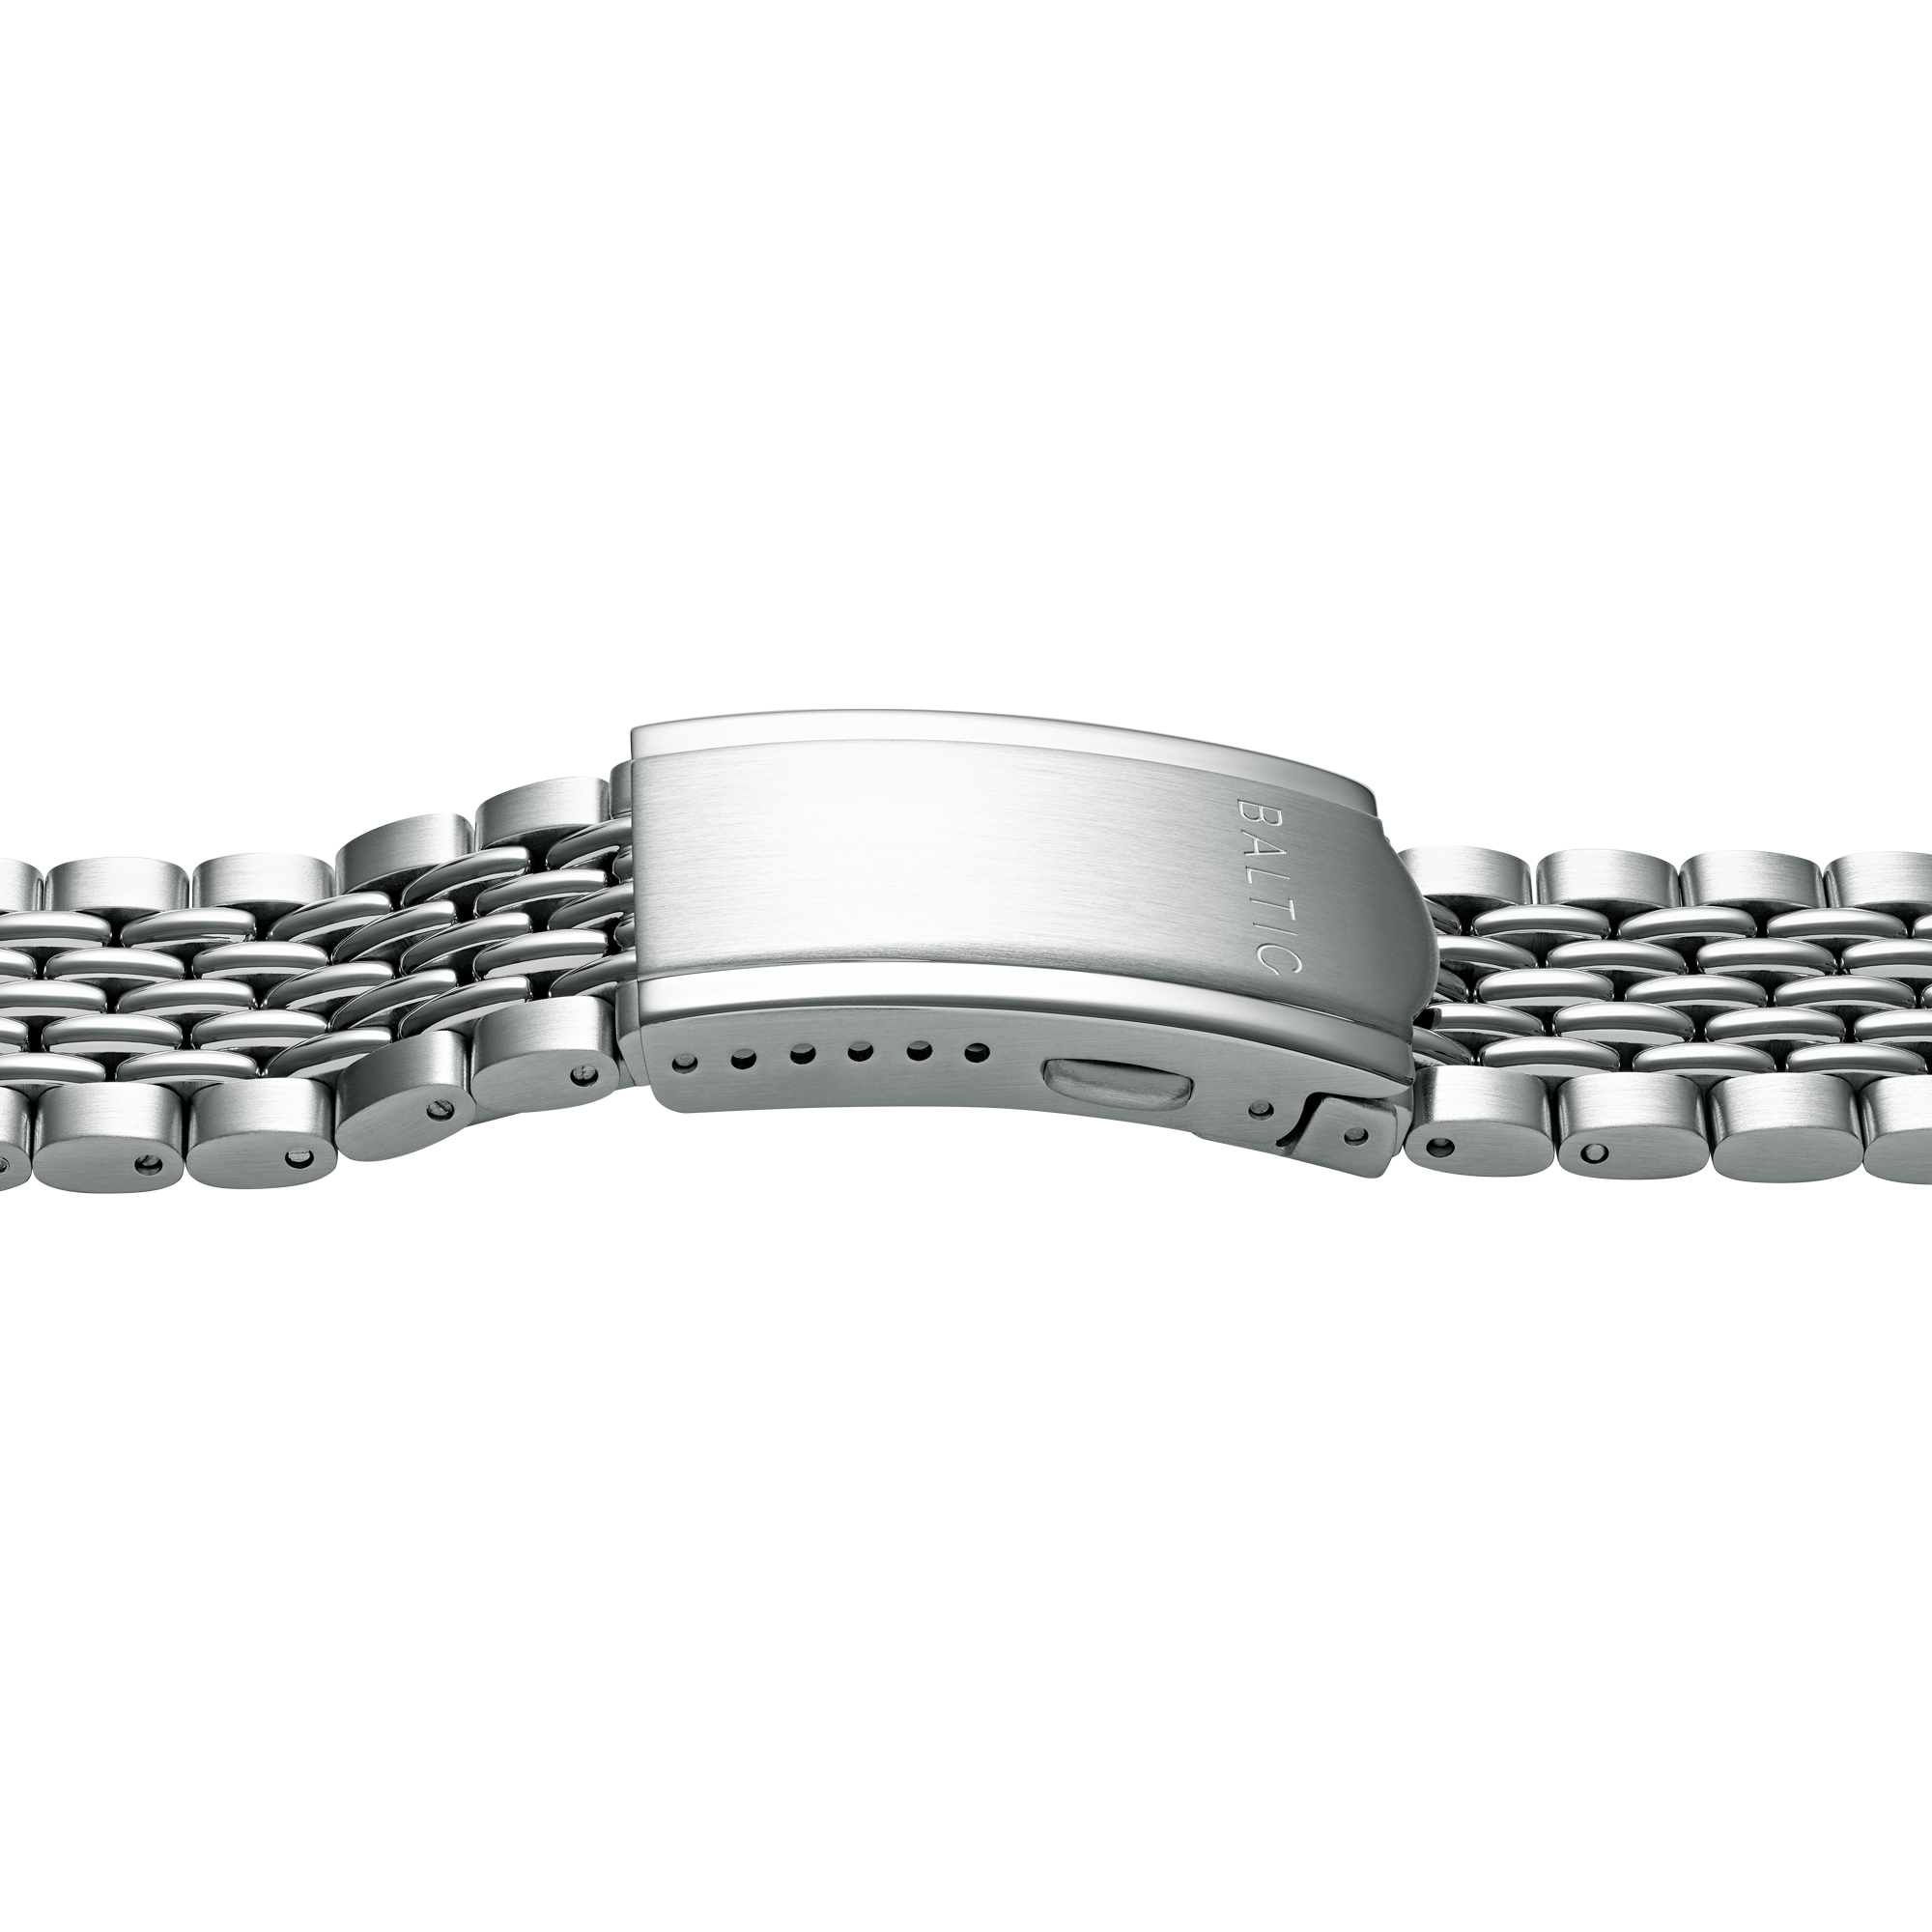 Flat link bracelet - Baltic Watches